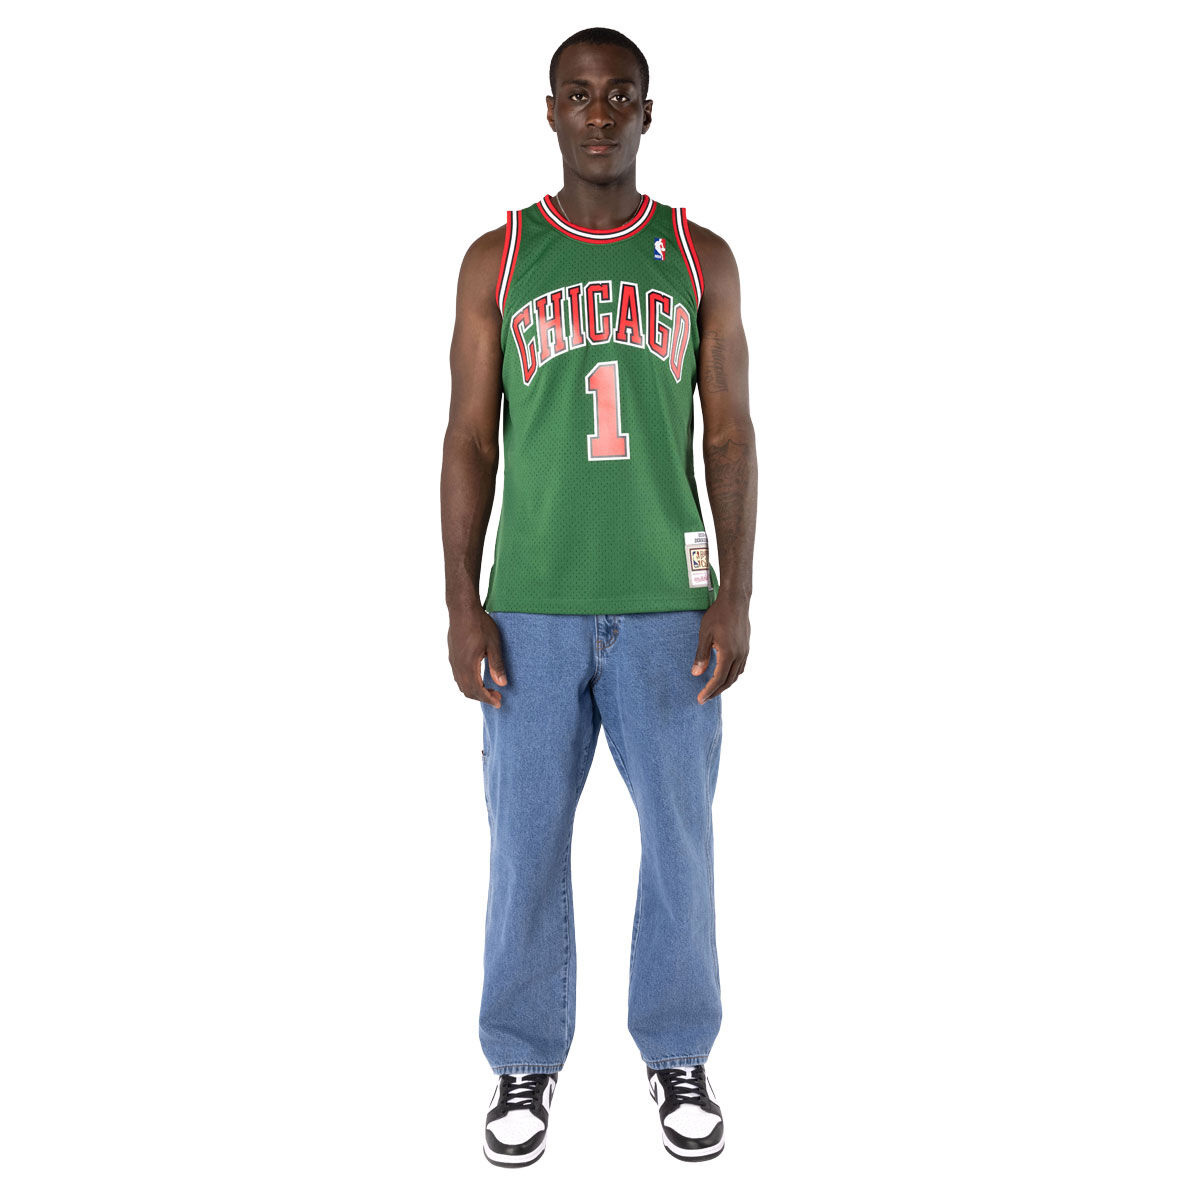 Chicago Bulls Derrick Rose swingman jersey - Adidas (Small) – At